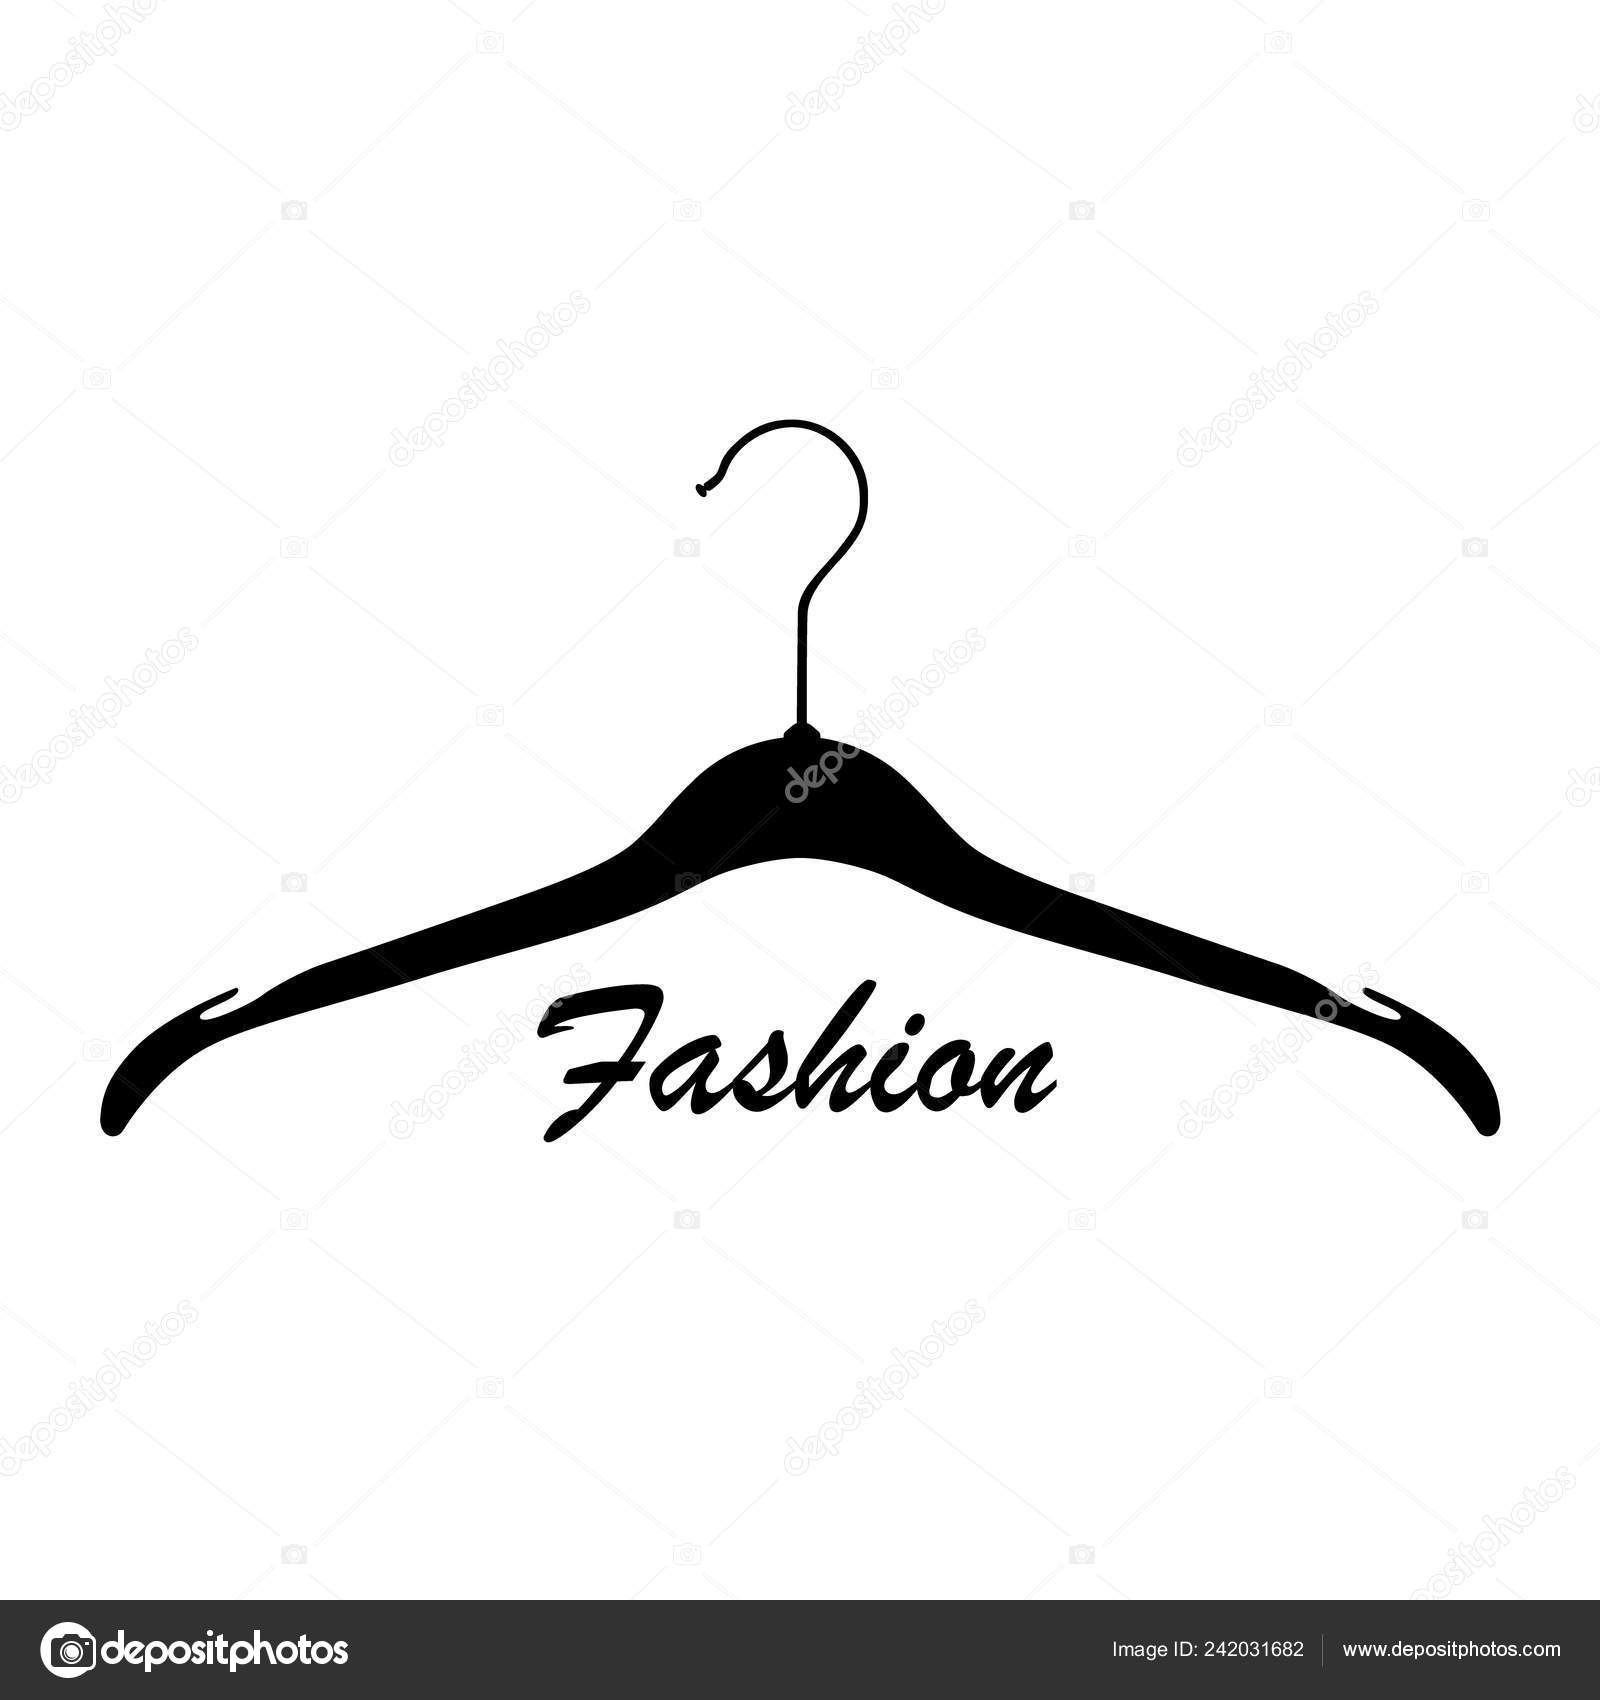 Closets Wear Cloth Logo Design Vector Stock Vector - Illustration